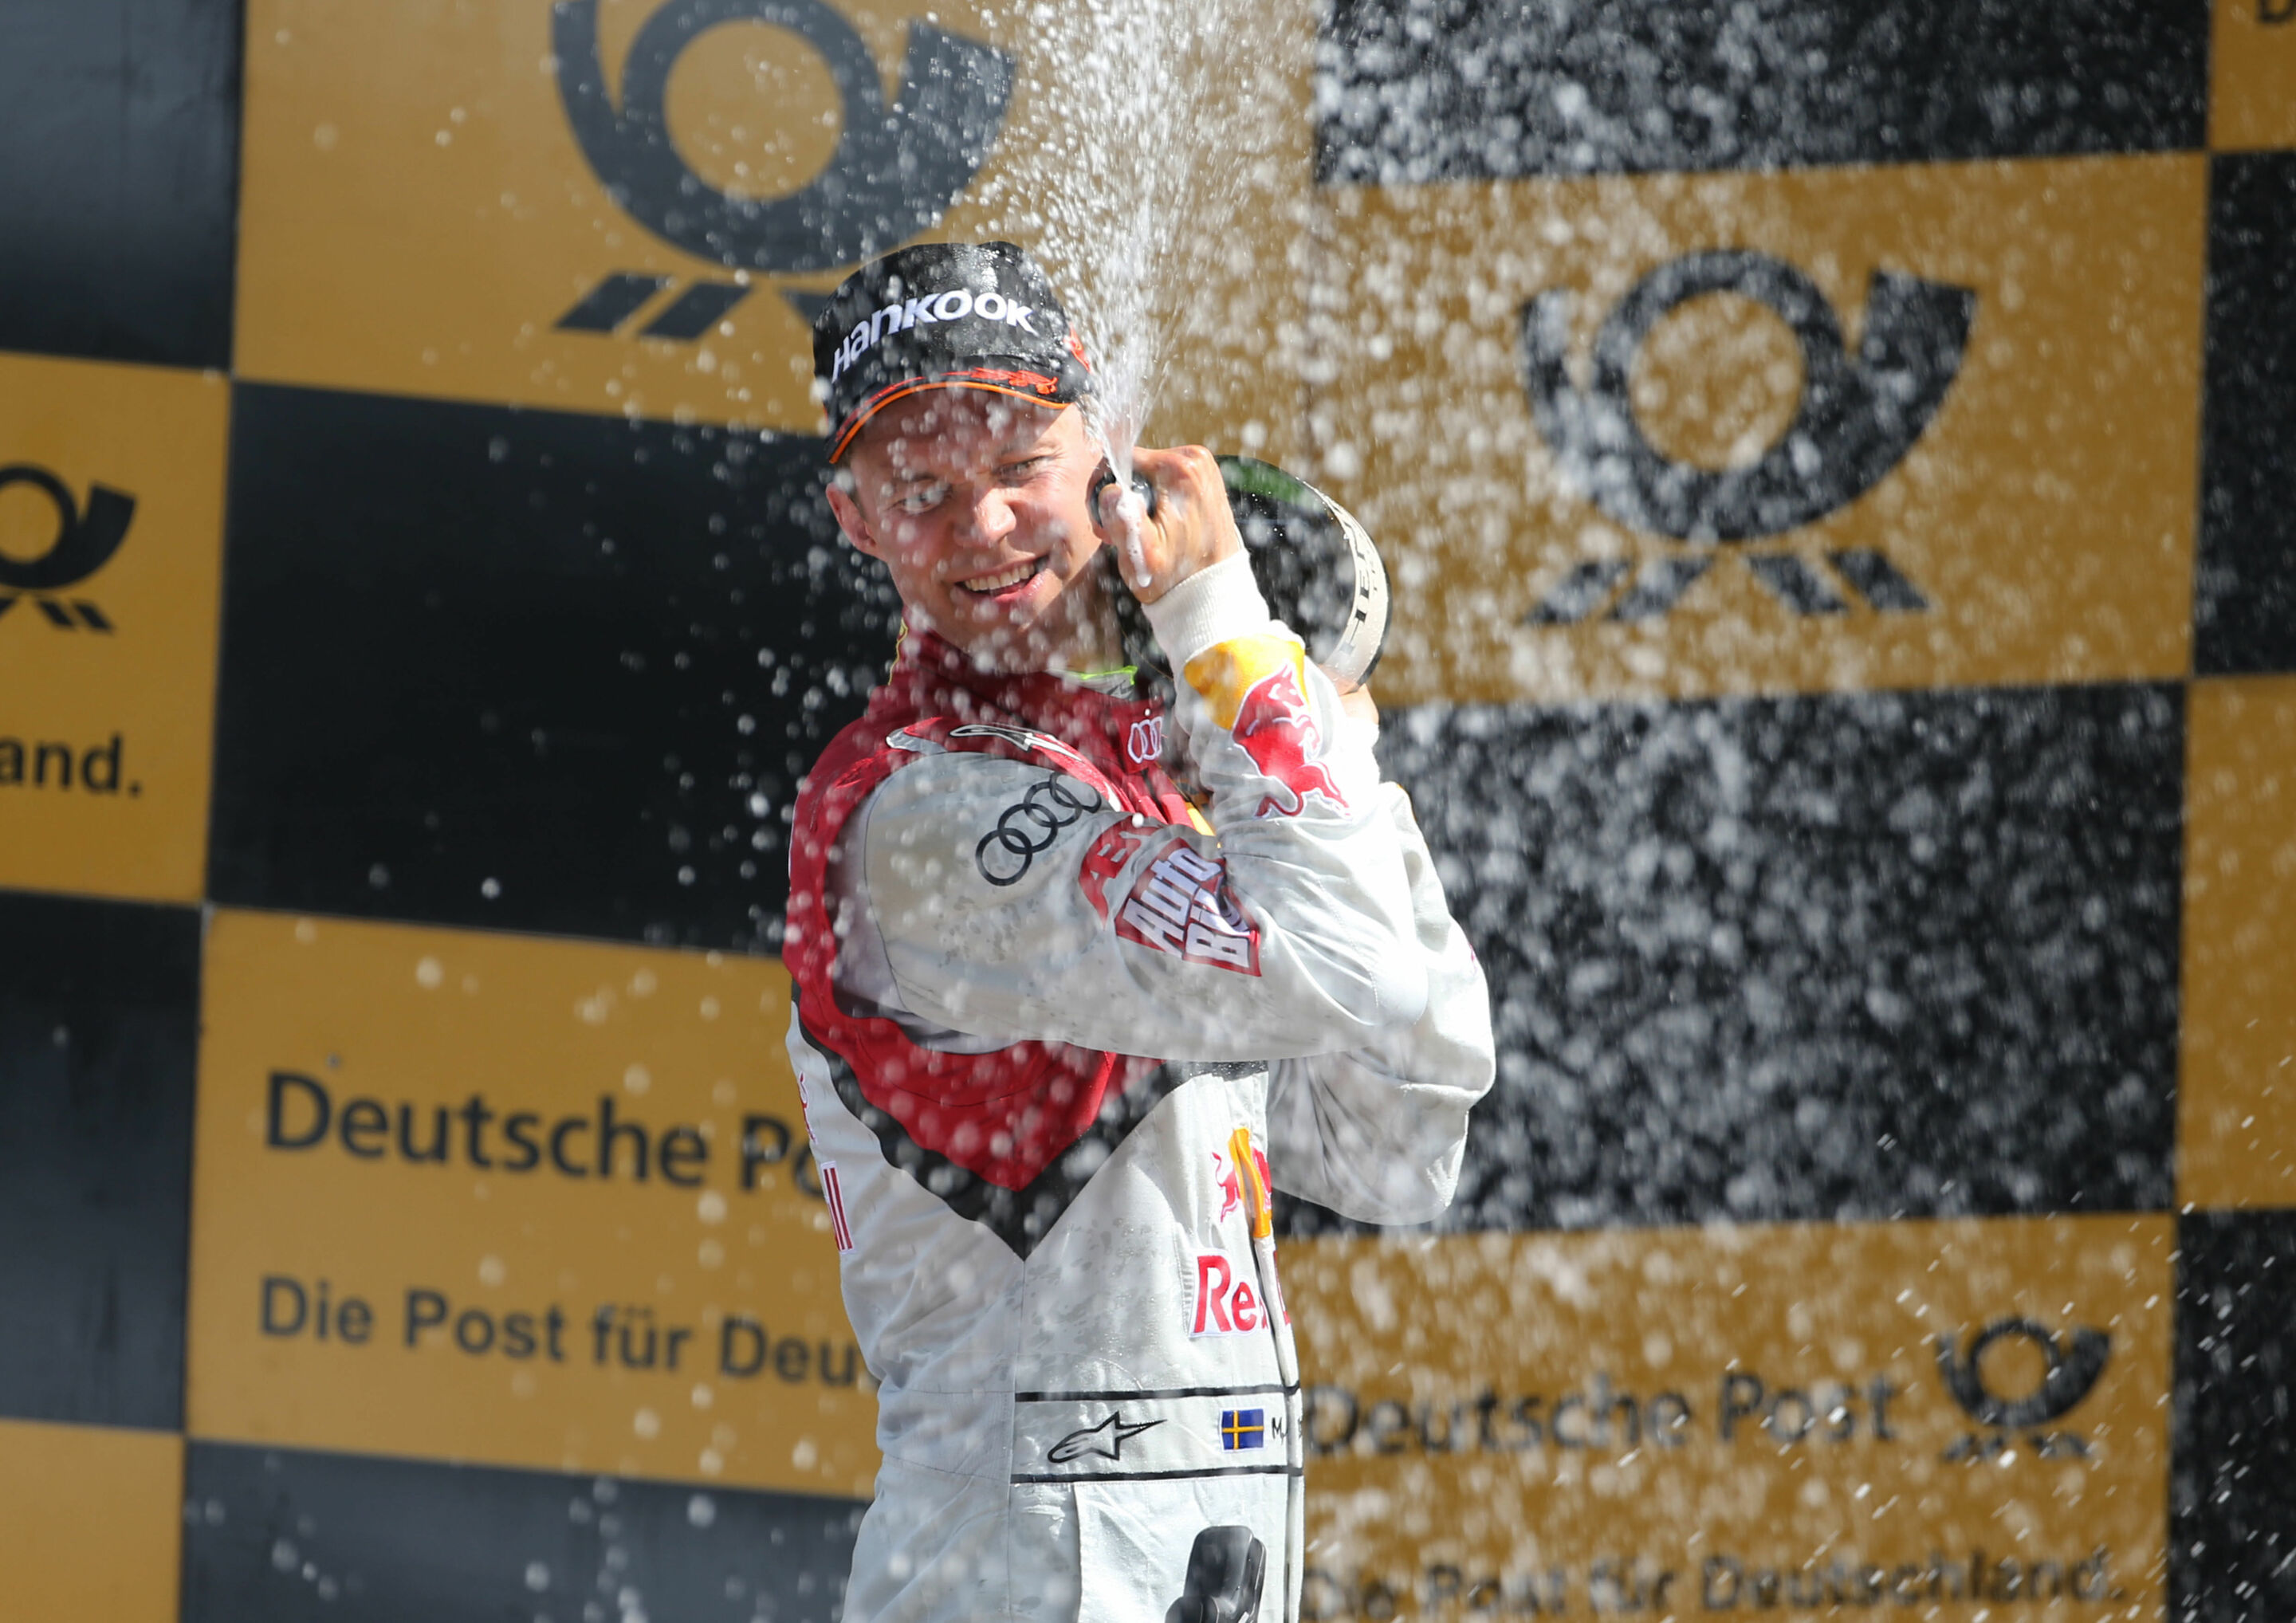 DTM Lausitzring 2015